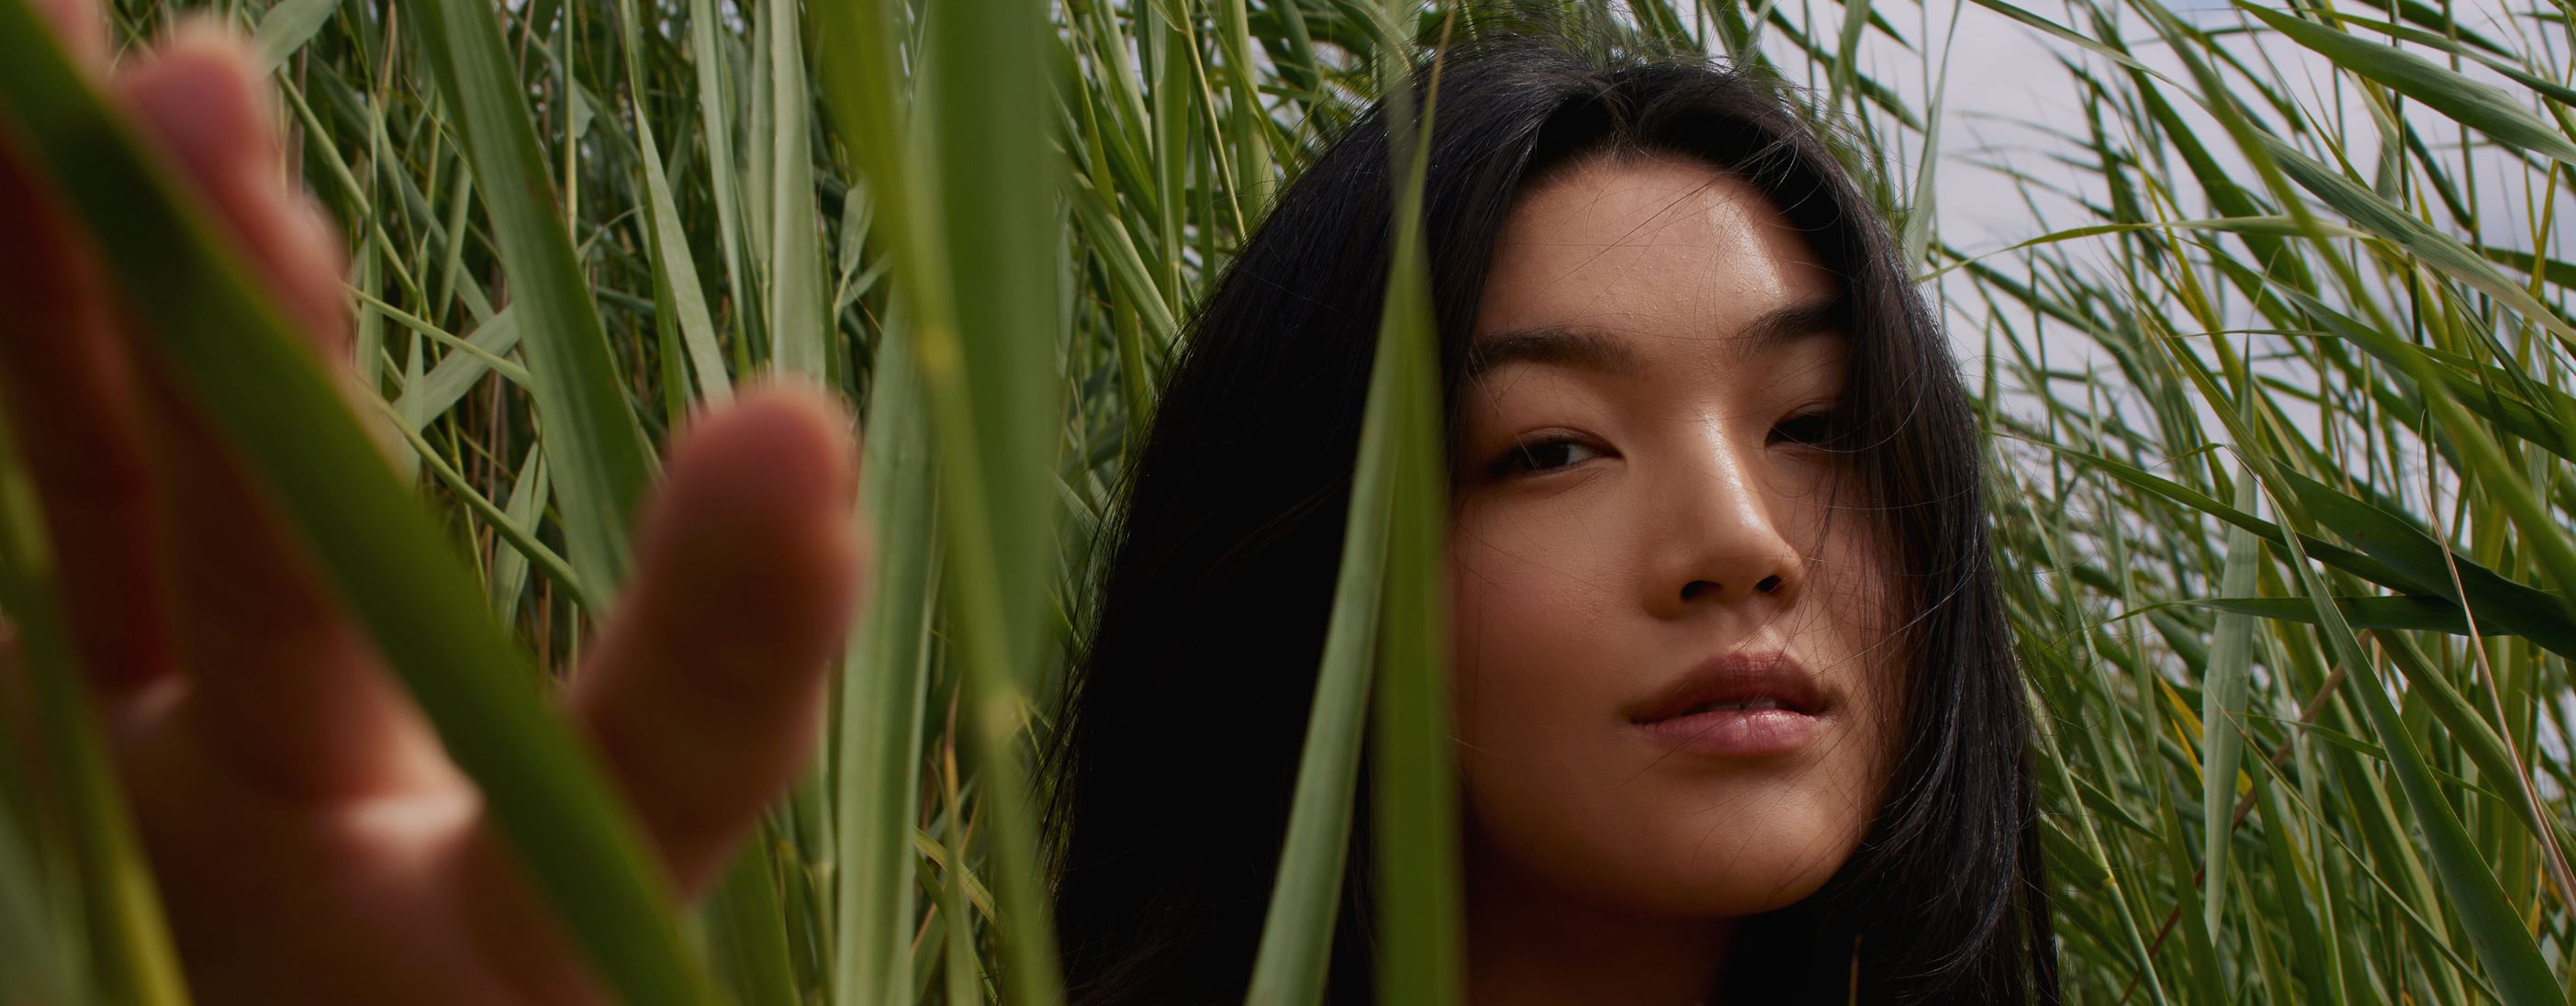 asian girl standing in a green field